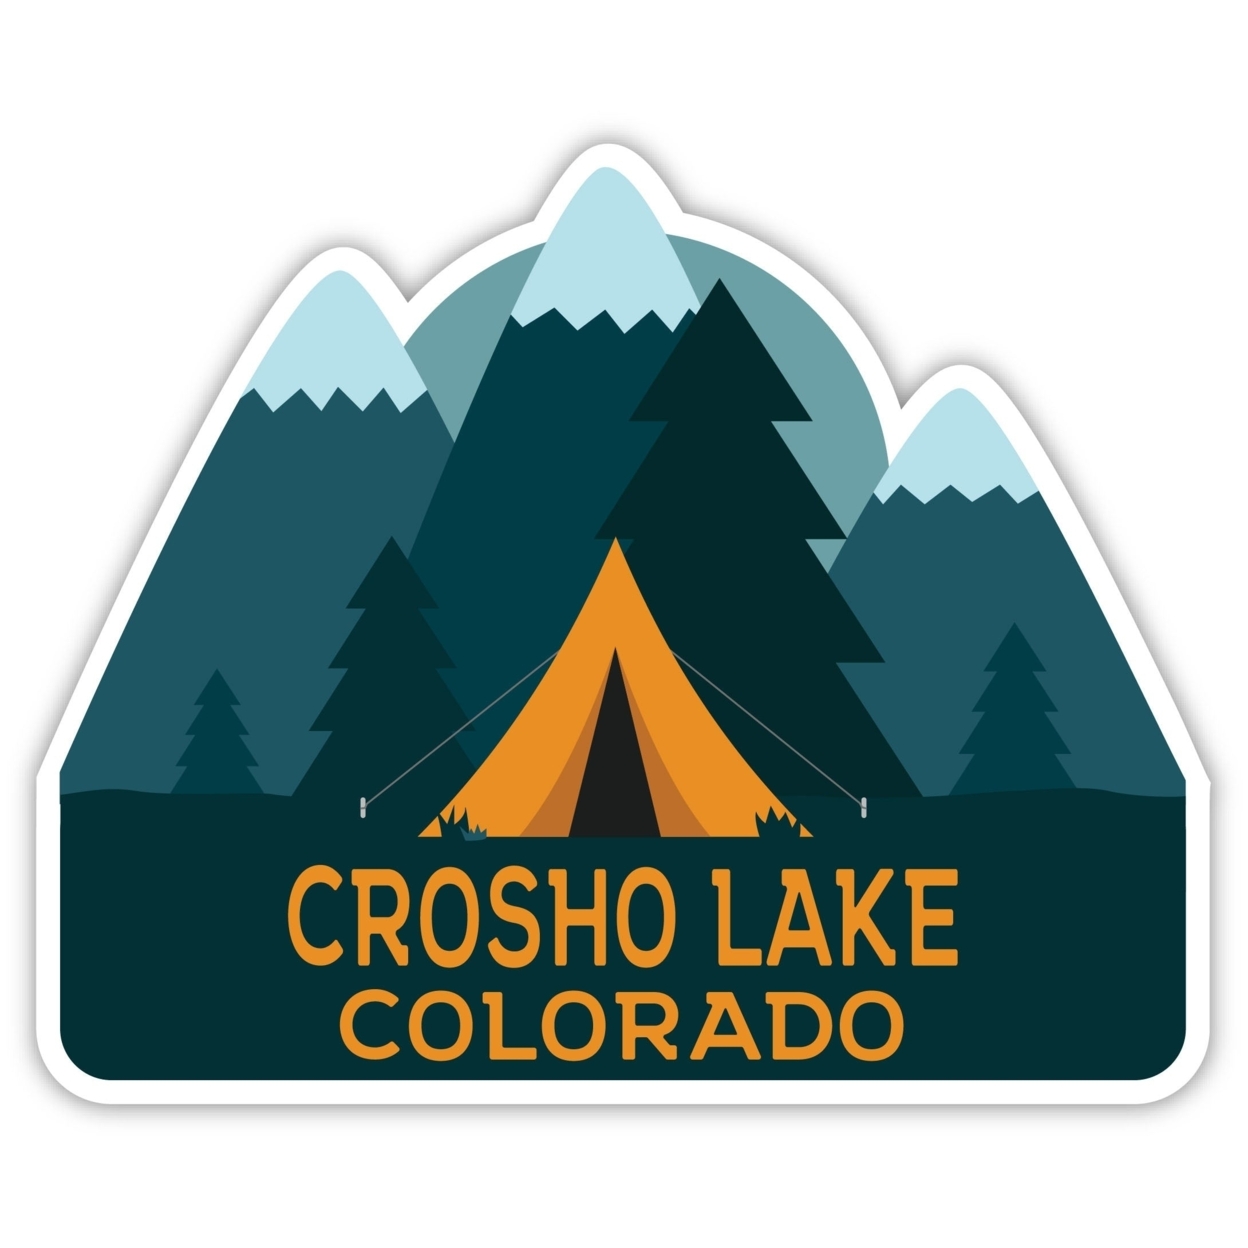 Crosho Lake Colorado Souvenir Decorative Stickers (Choose Theme And Size) - 4-Pack, 4-Inch, Tent